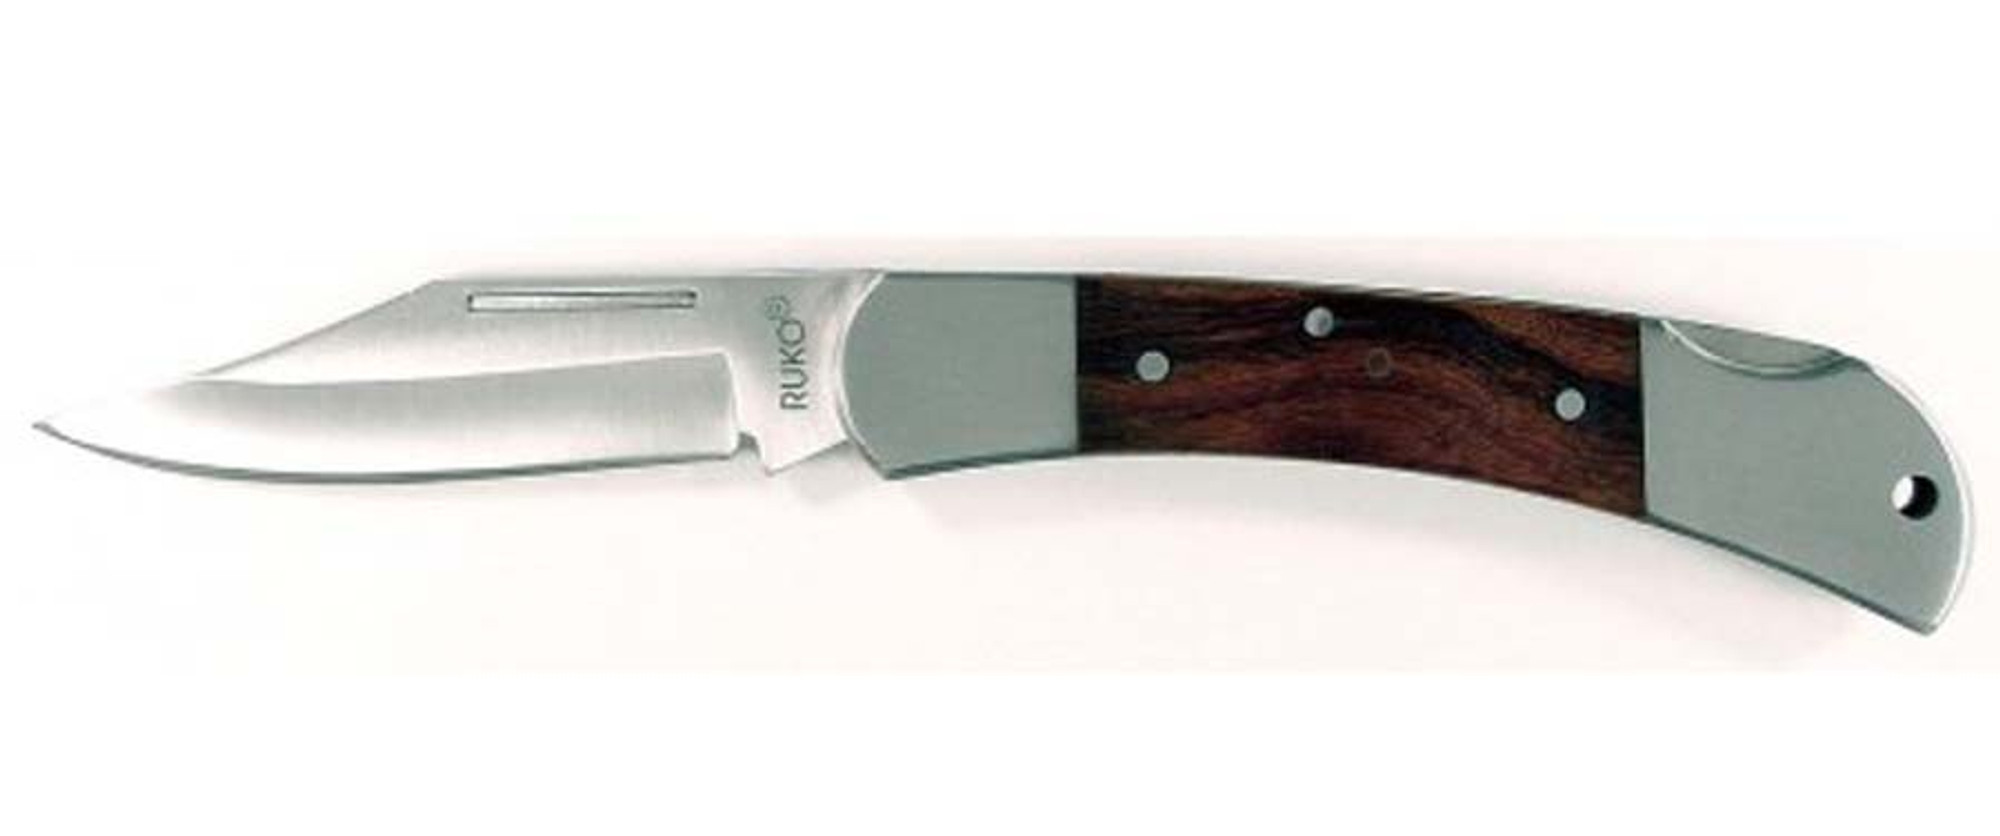 RUKO NK813-40K, 420A, 3-1/2" Folding Blade Knife, Hardwood Handle